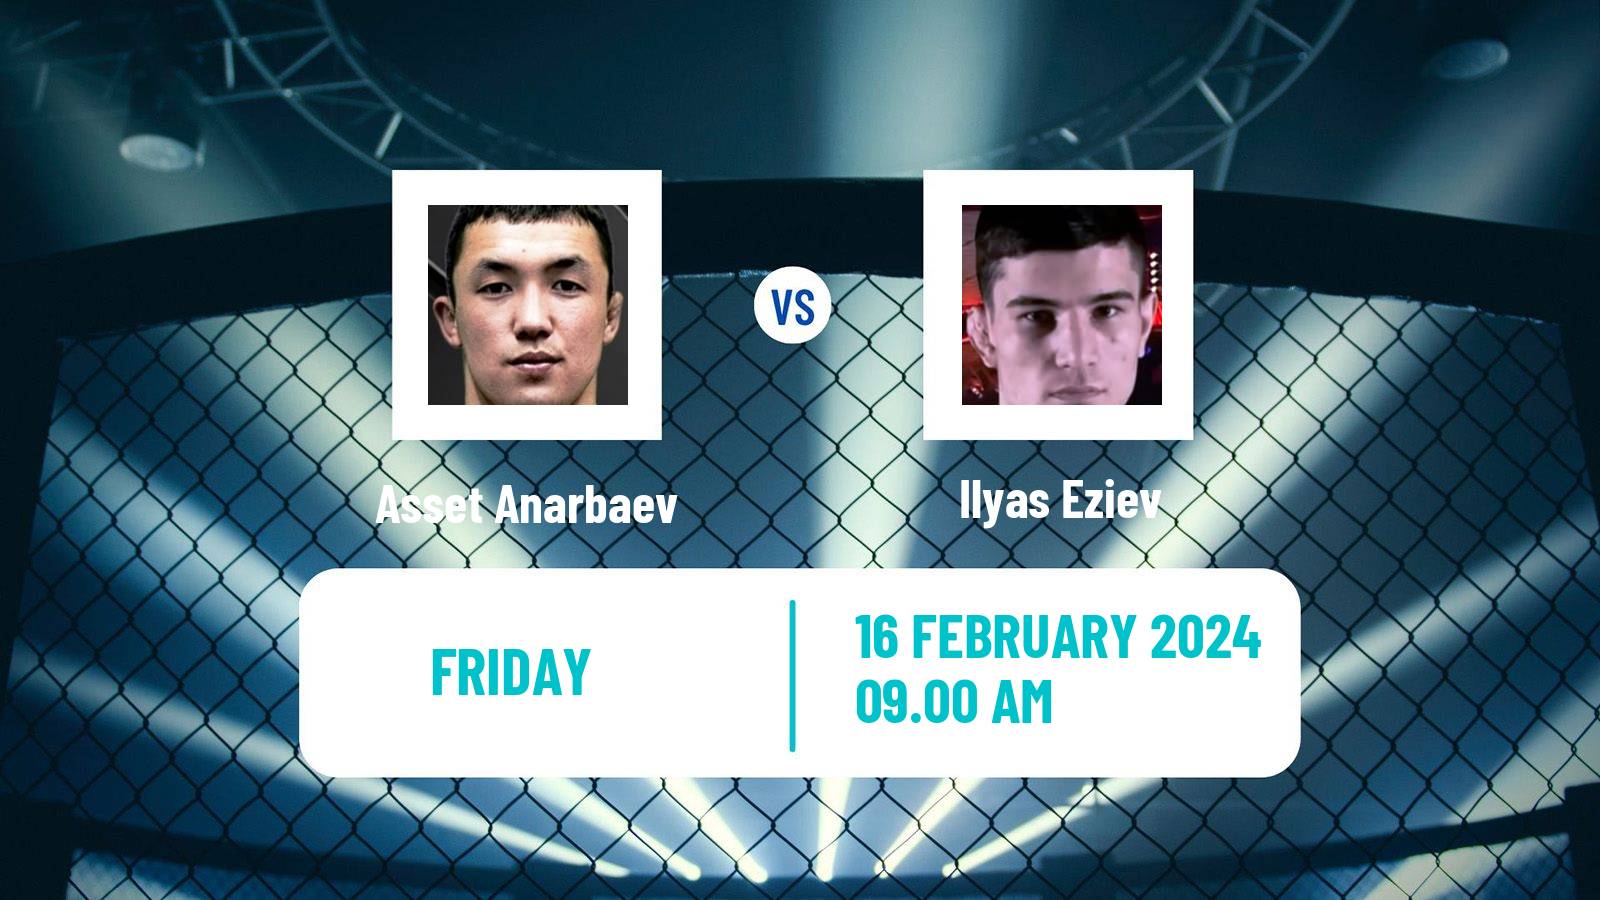 MMA Bantamweight One Championship Men Asset Anarbaev - Ilyas Eziev